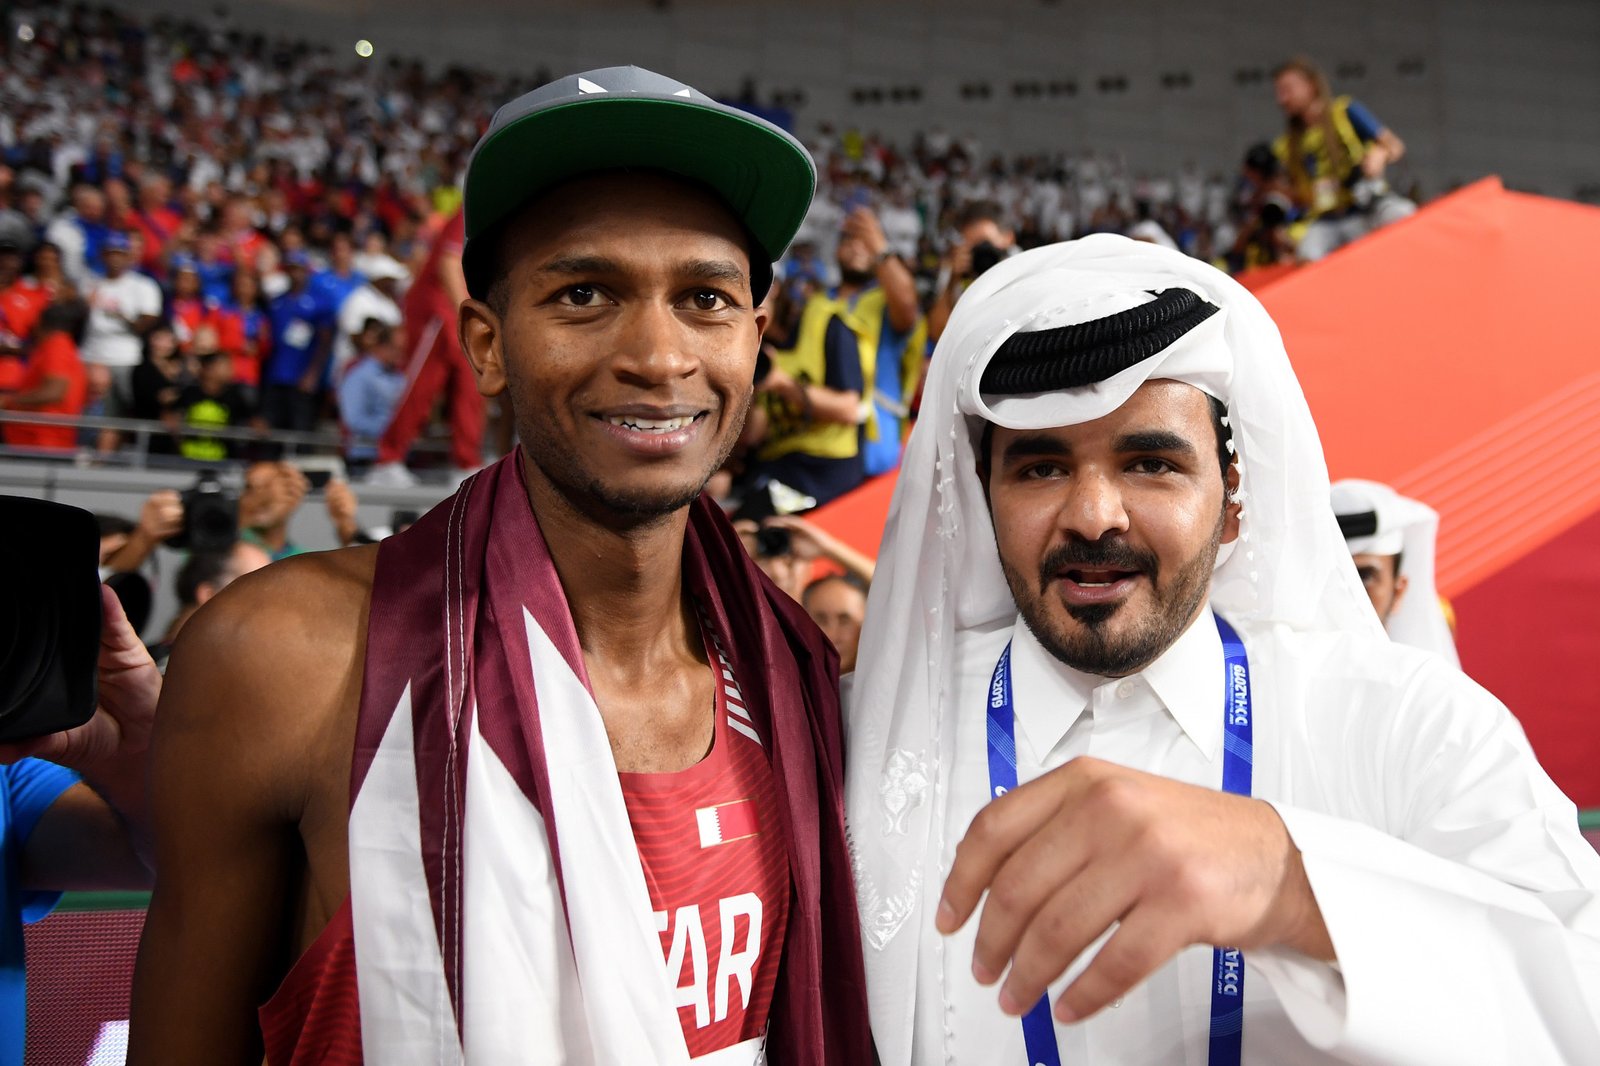 Tokyo 2020 Summer Olympics : Barshim Won 2nd Gold Medal For Qatar